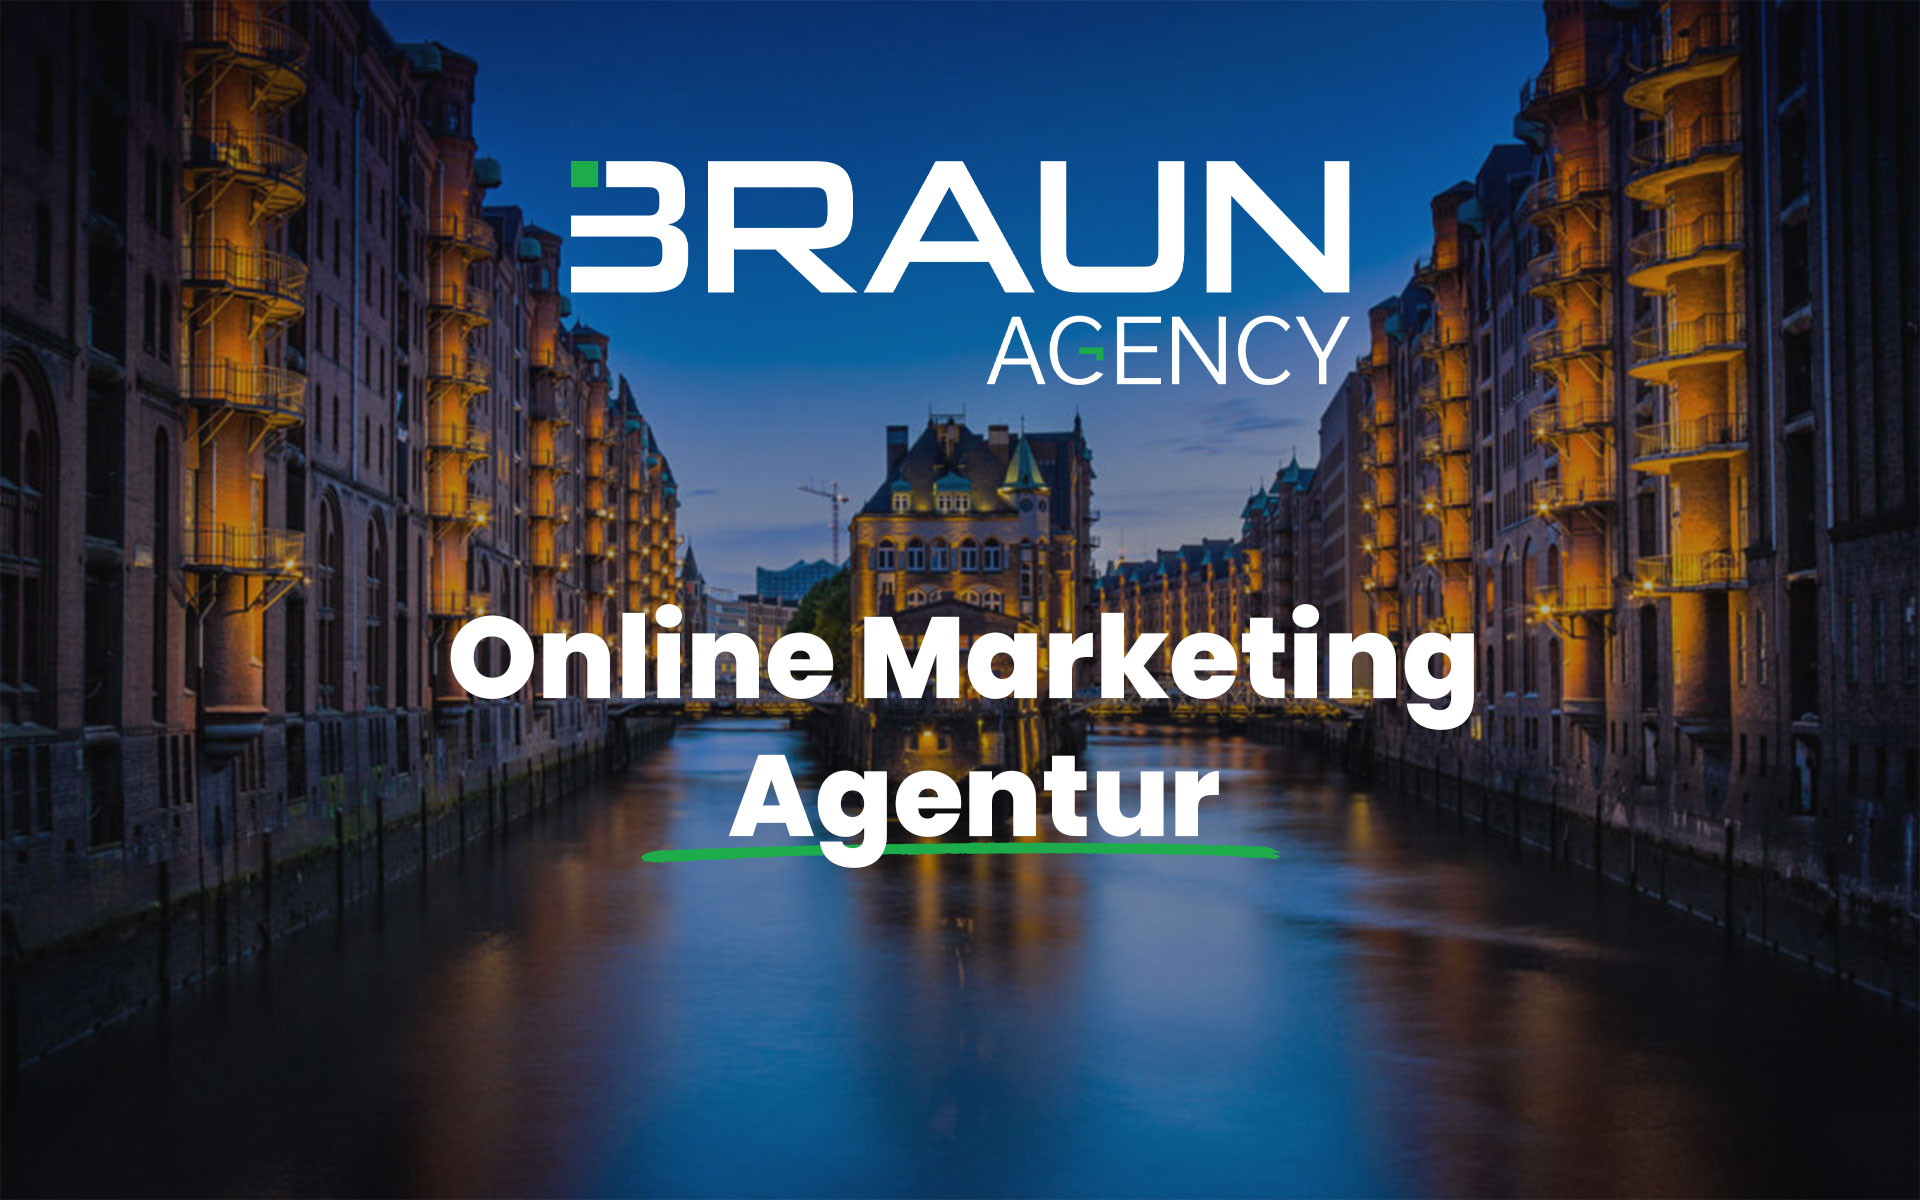 (c) Braun-agency.de